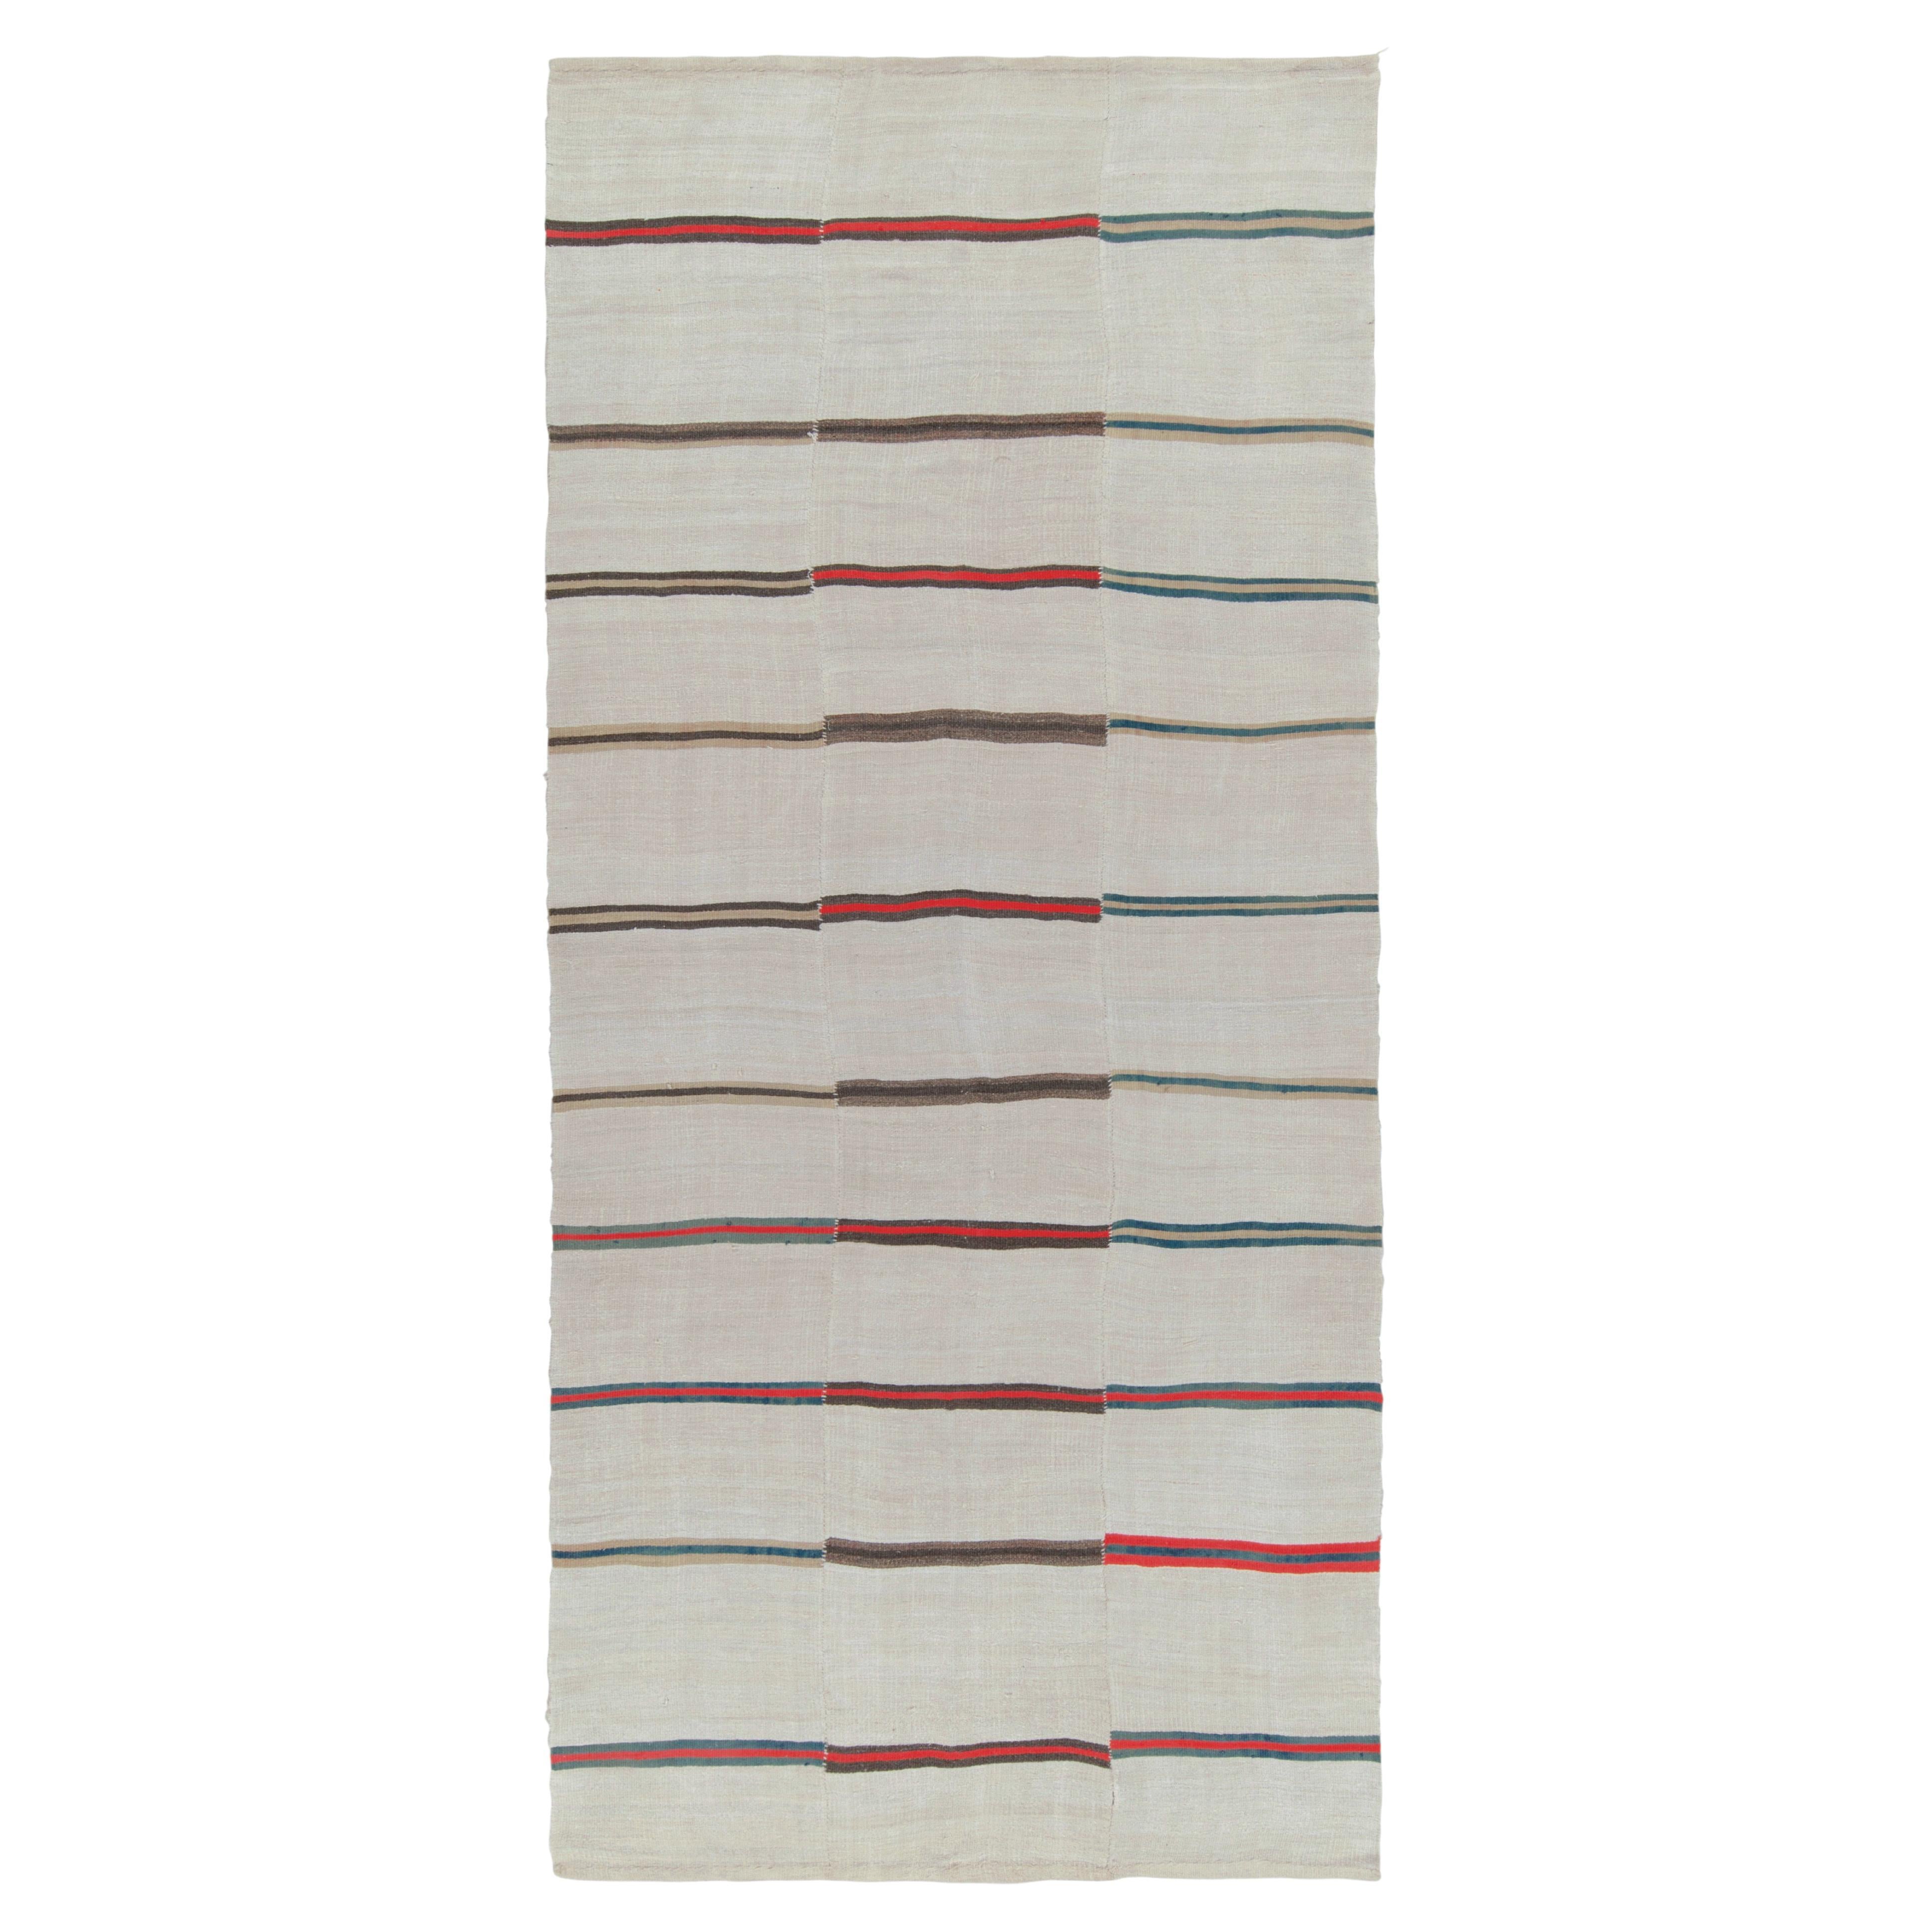 Vintage Kilim rug in Off-White, Red Stripe Patterns, Panel style by Rug & Kilim